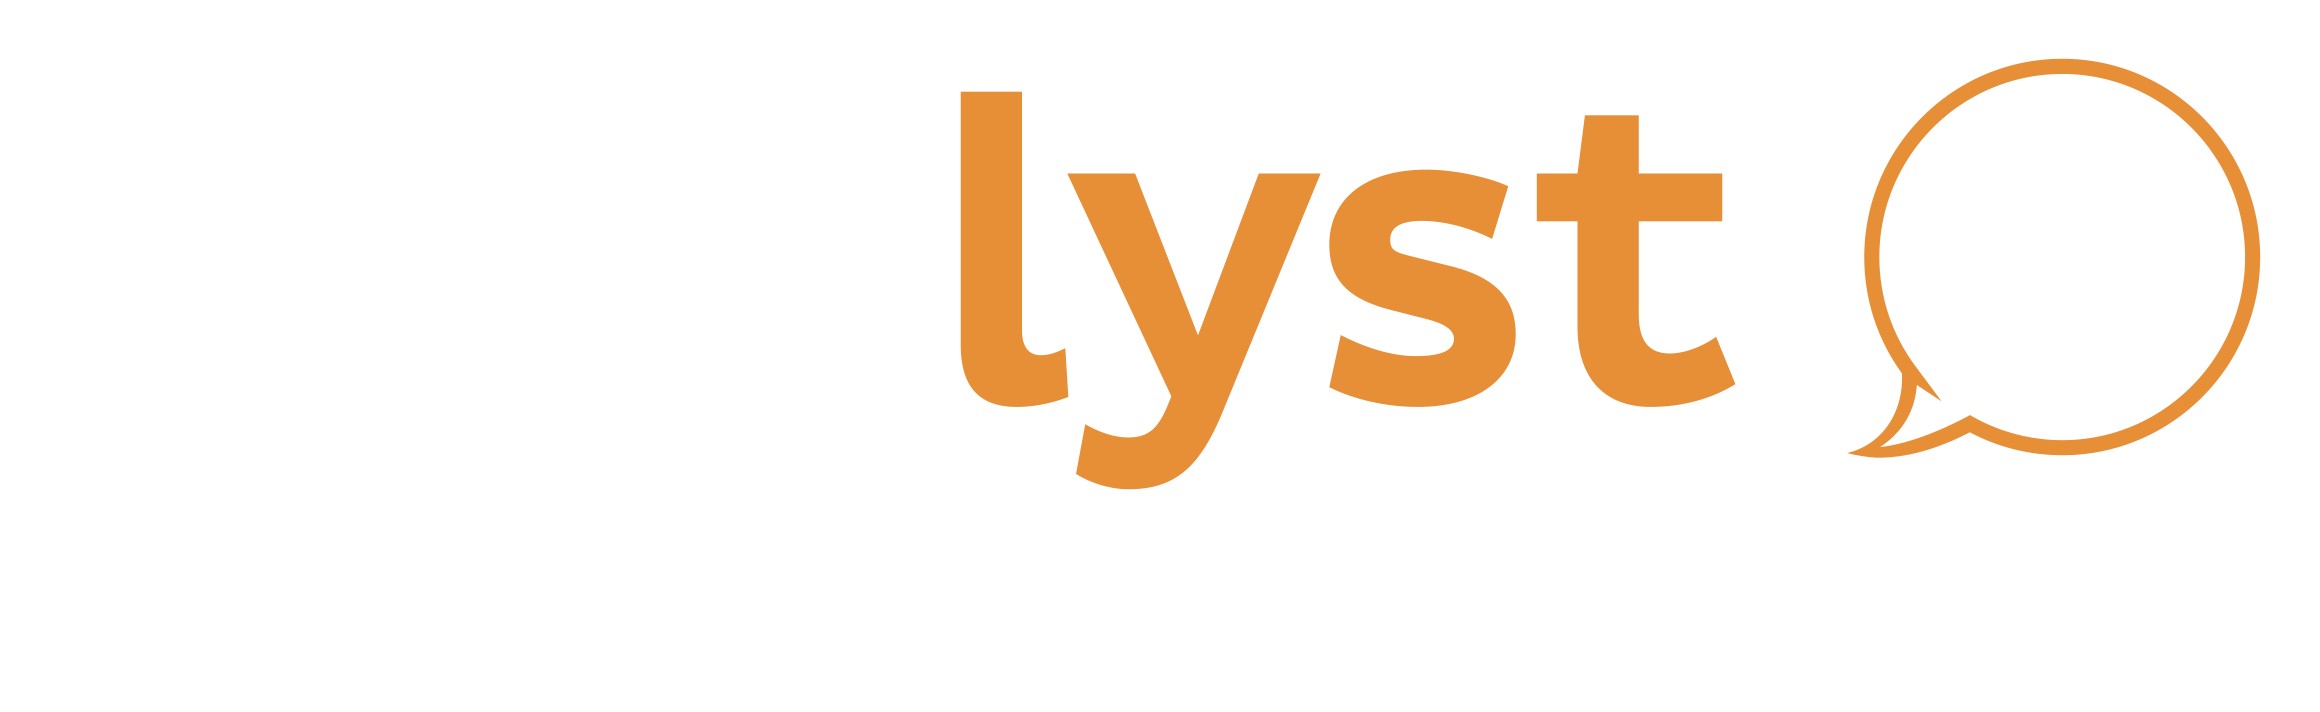 peerlyst dark logo